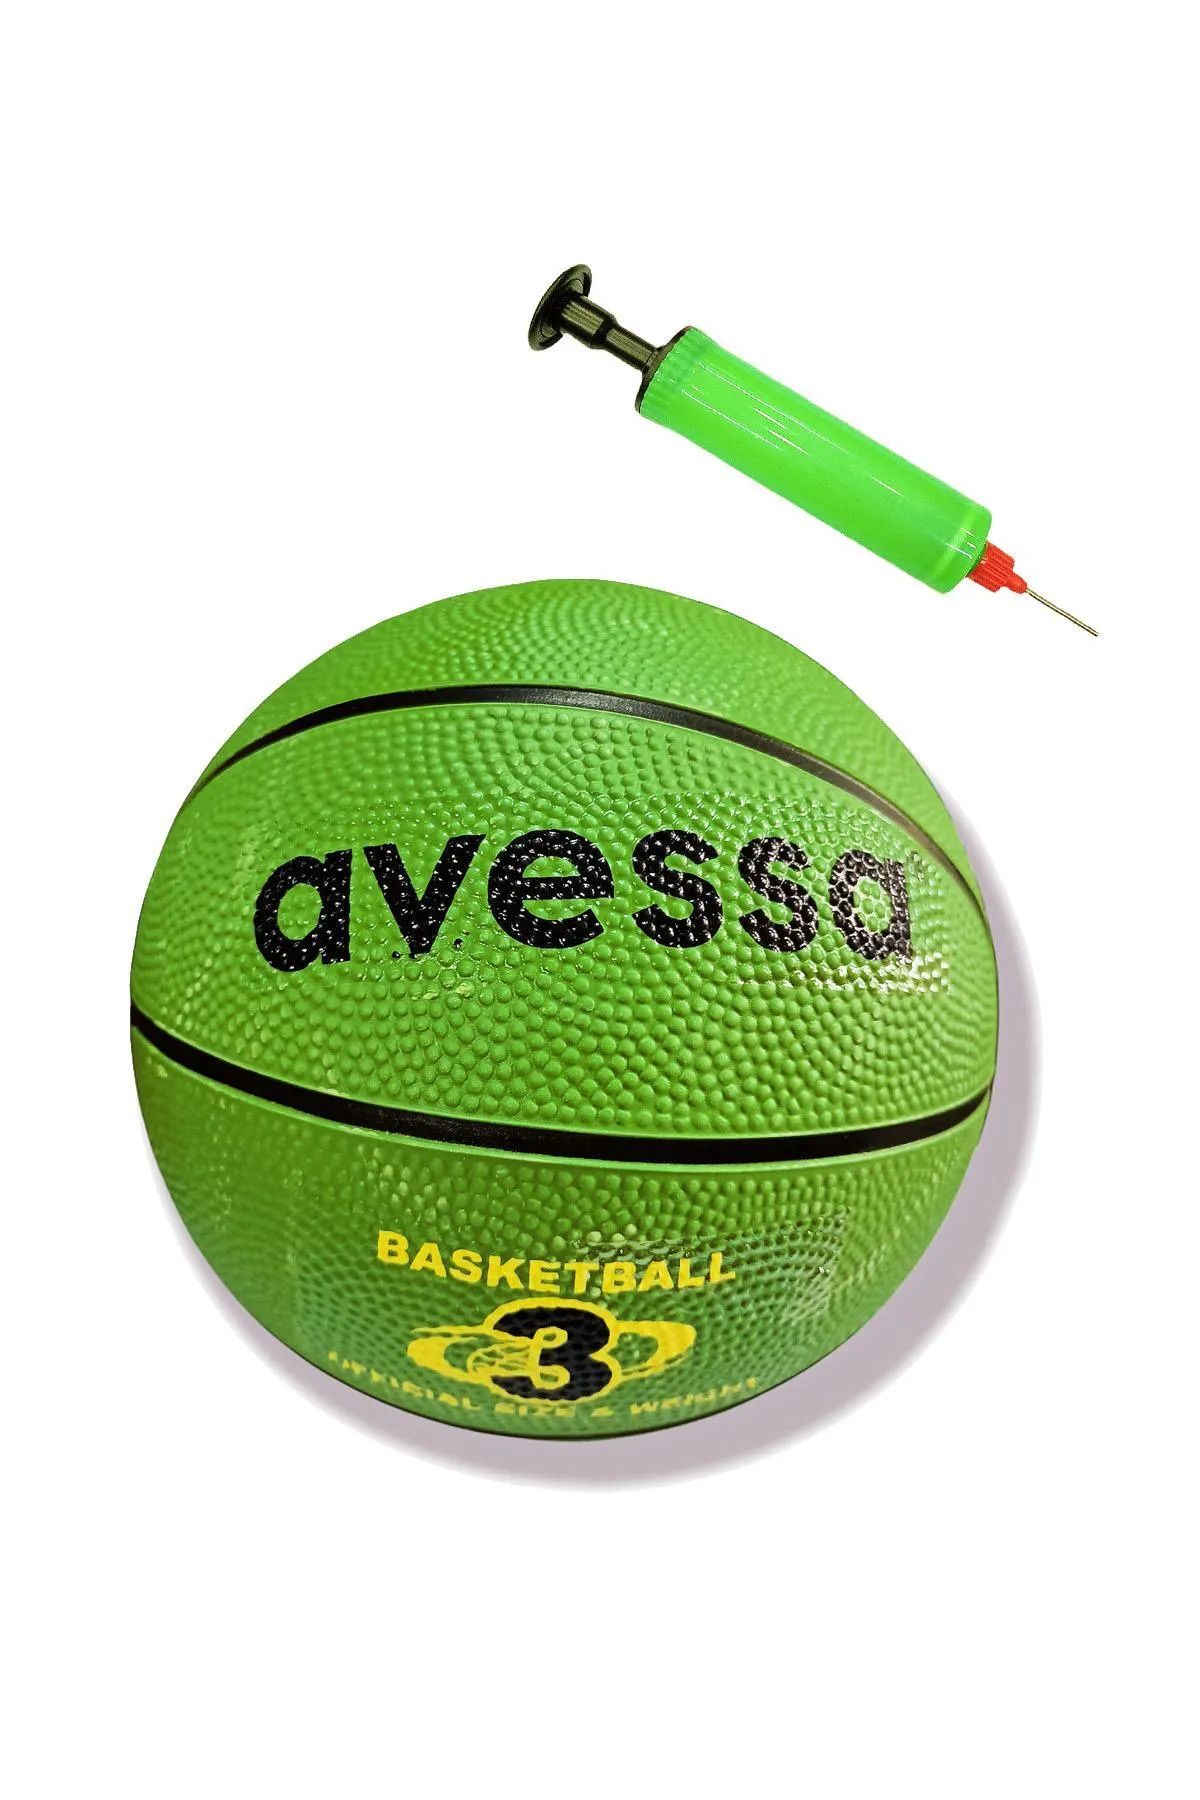 TOCSPORTS Yeşil Basketbol Topu - No 3 - 280 Gram - Pompa Dahil